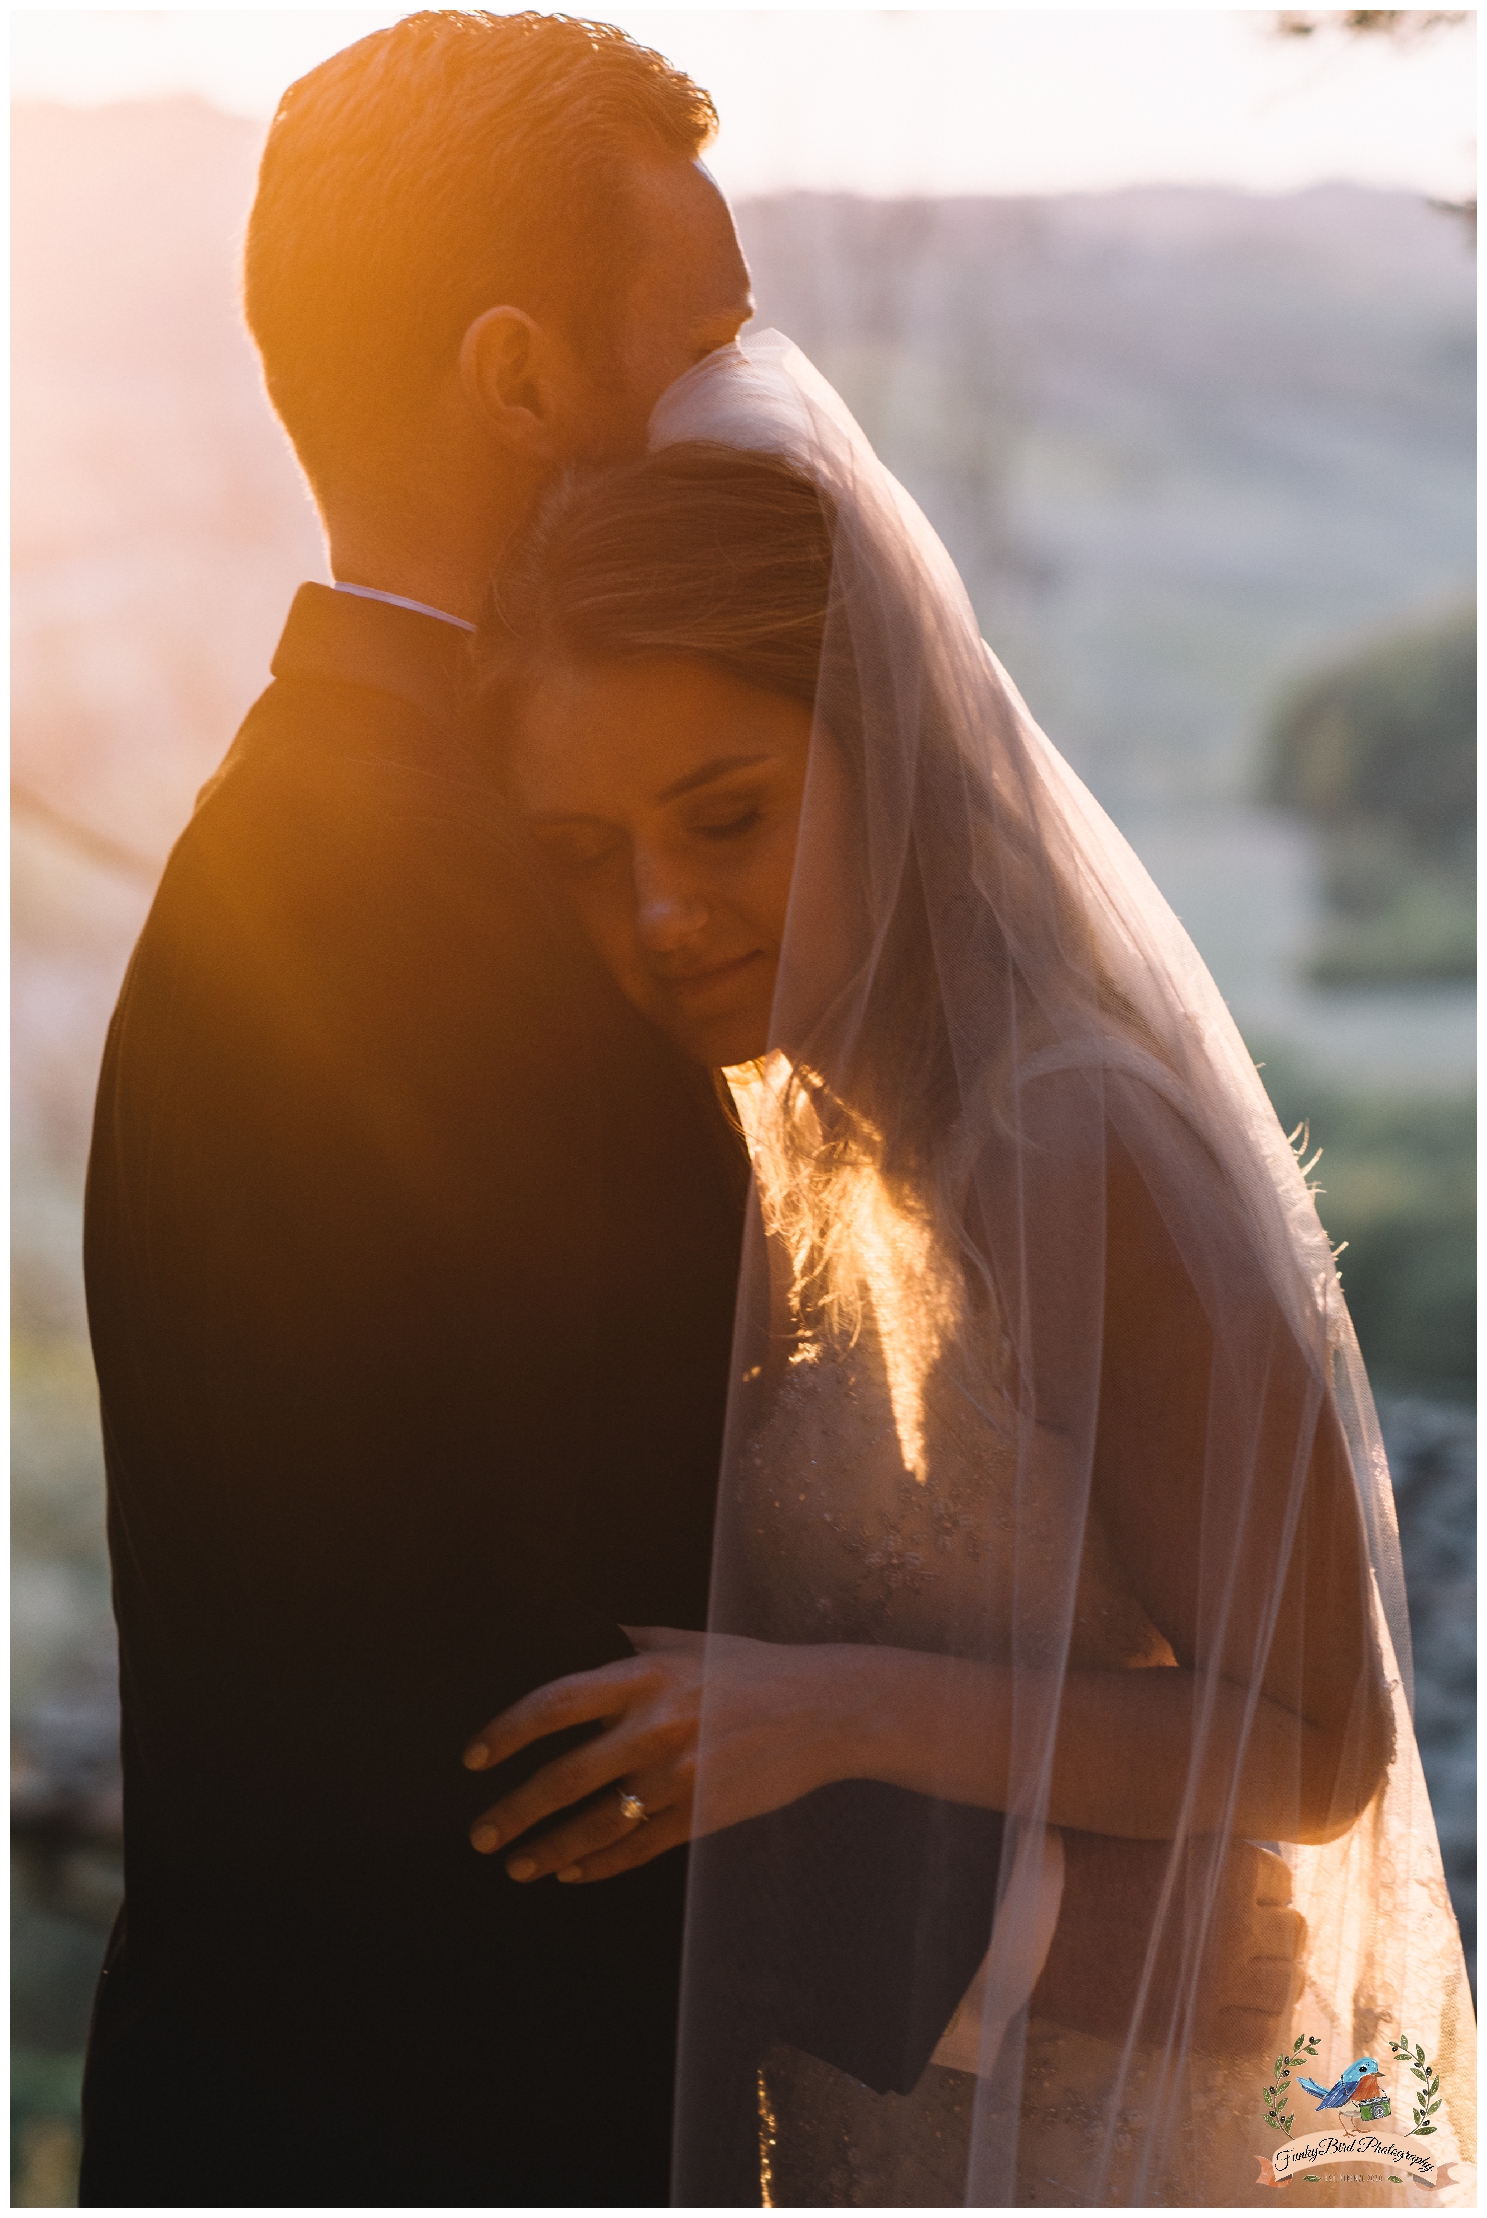  Wedding Photographer in Tuscany, Wedding Photographer in Florence, Wedding Photographer Siena, Italian Wedding Photographer, Wedding in Tuscany, Wedding in Florence, Wedding in Italy, Castello di Montegufoni 